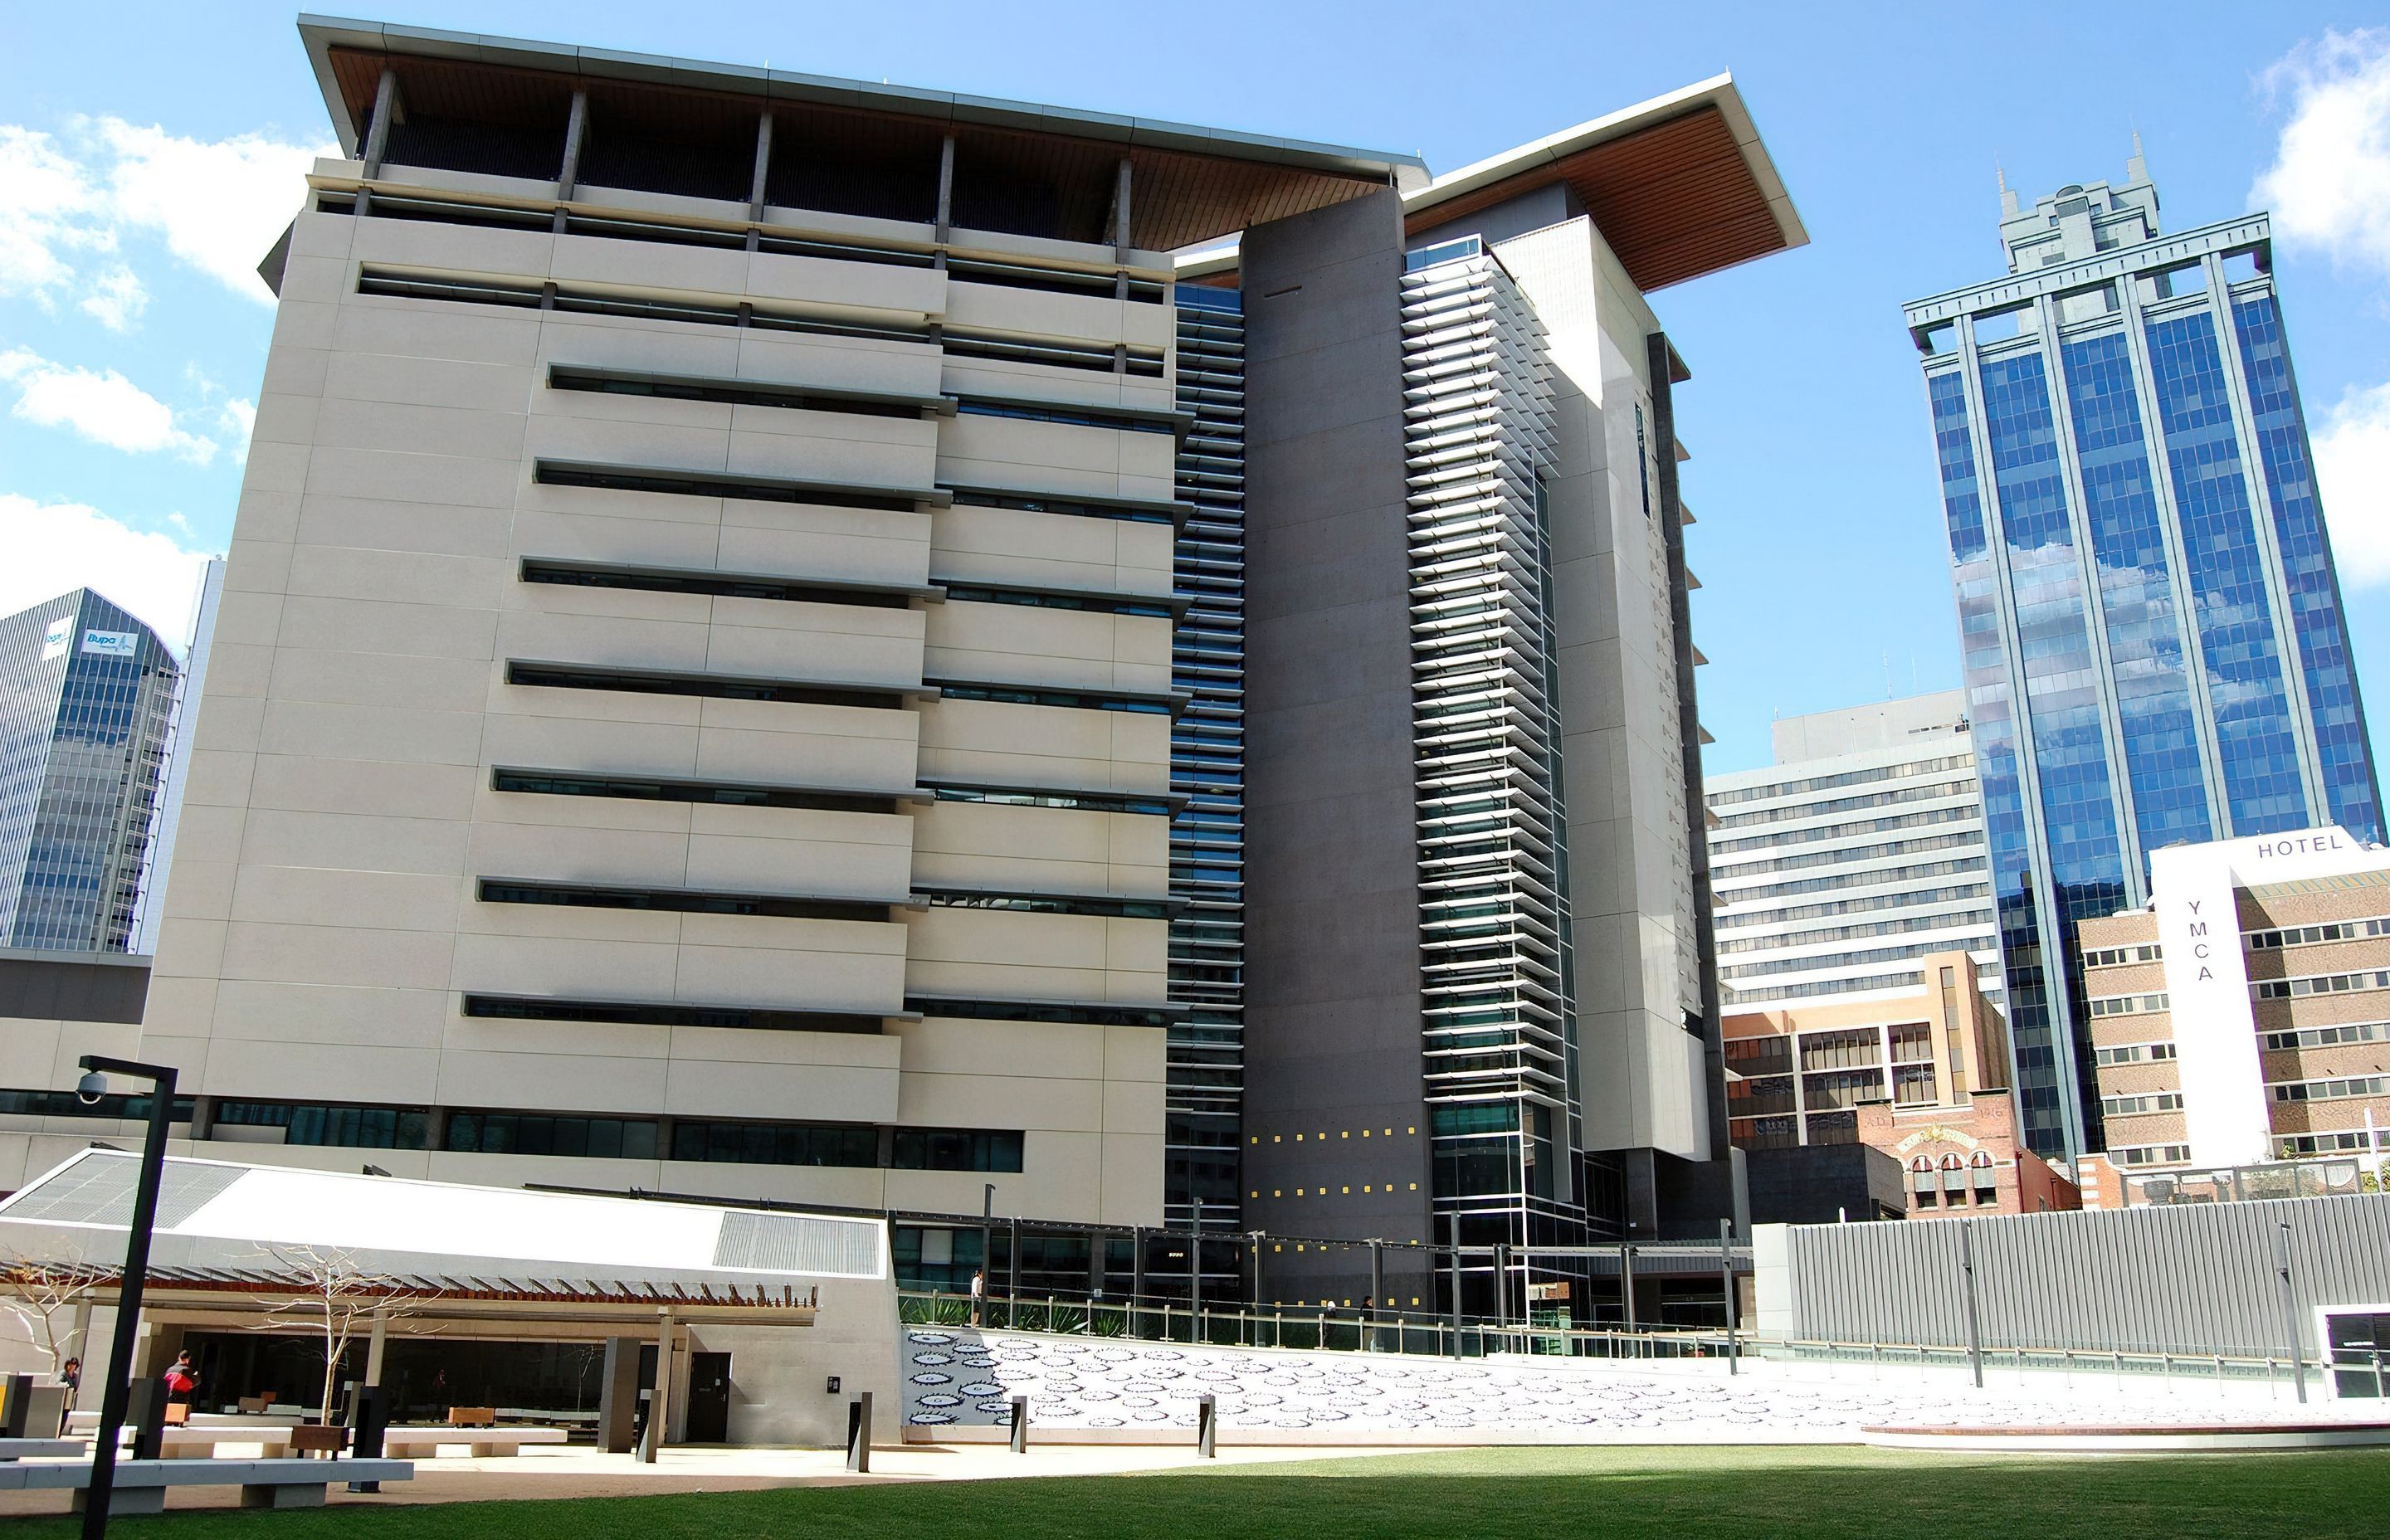 Brisbane Law Courts